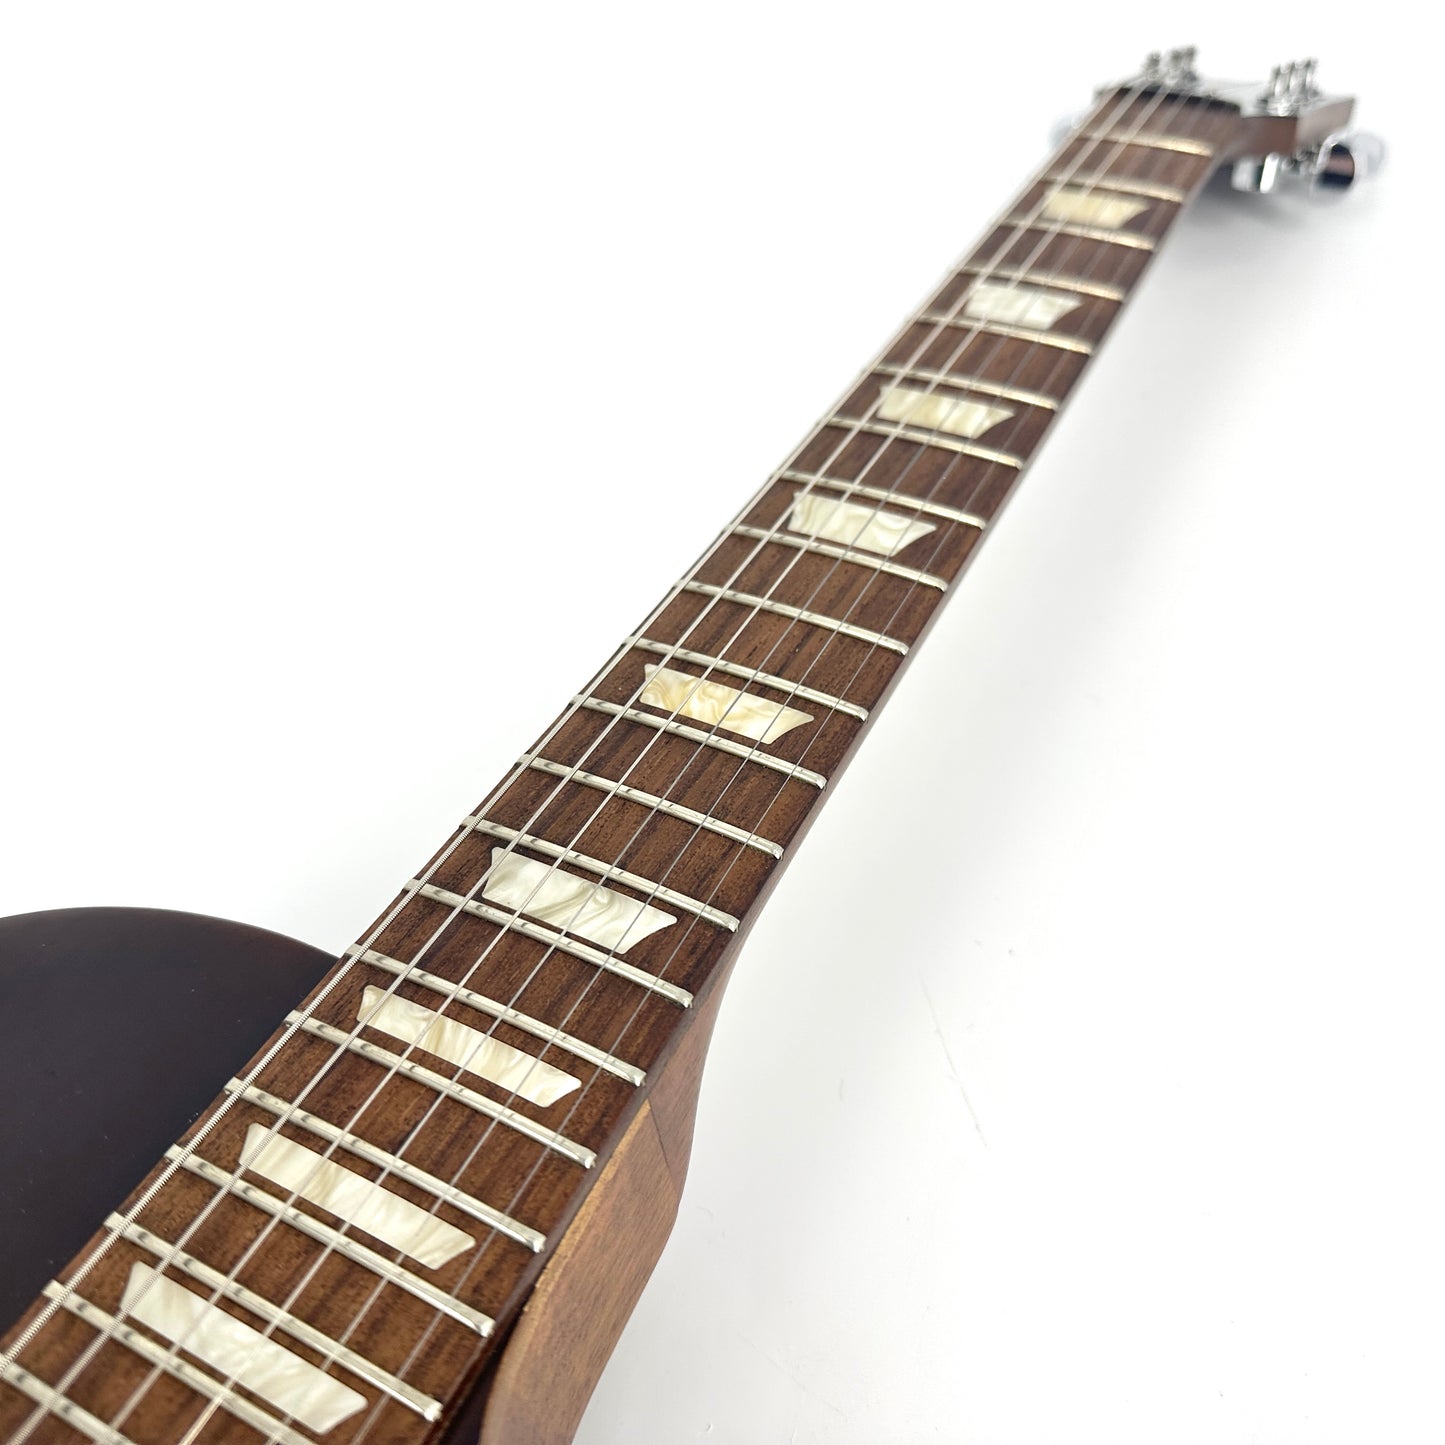 2012 Gibson Les Paul Studio '50s Tribute - Vintage Sunburst